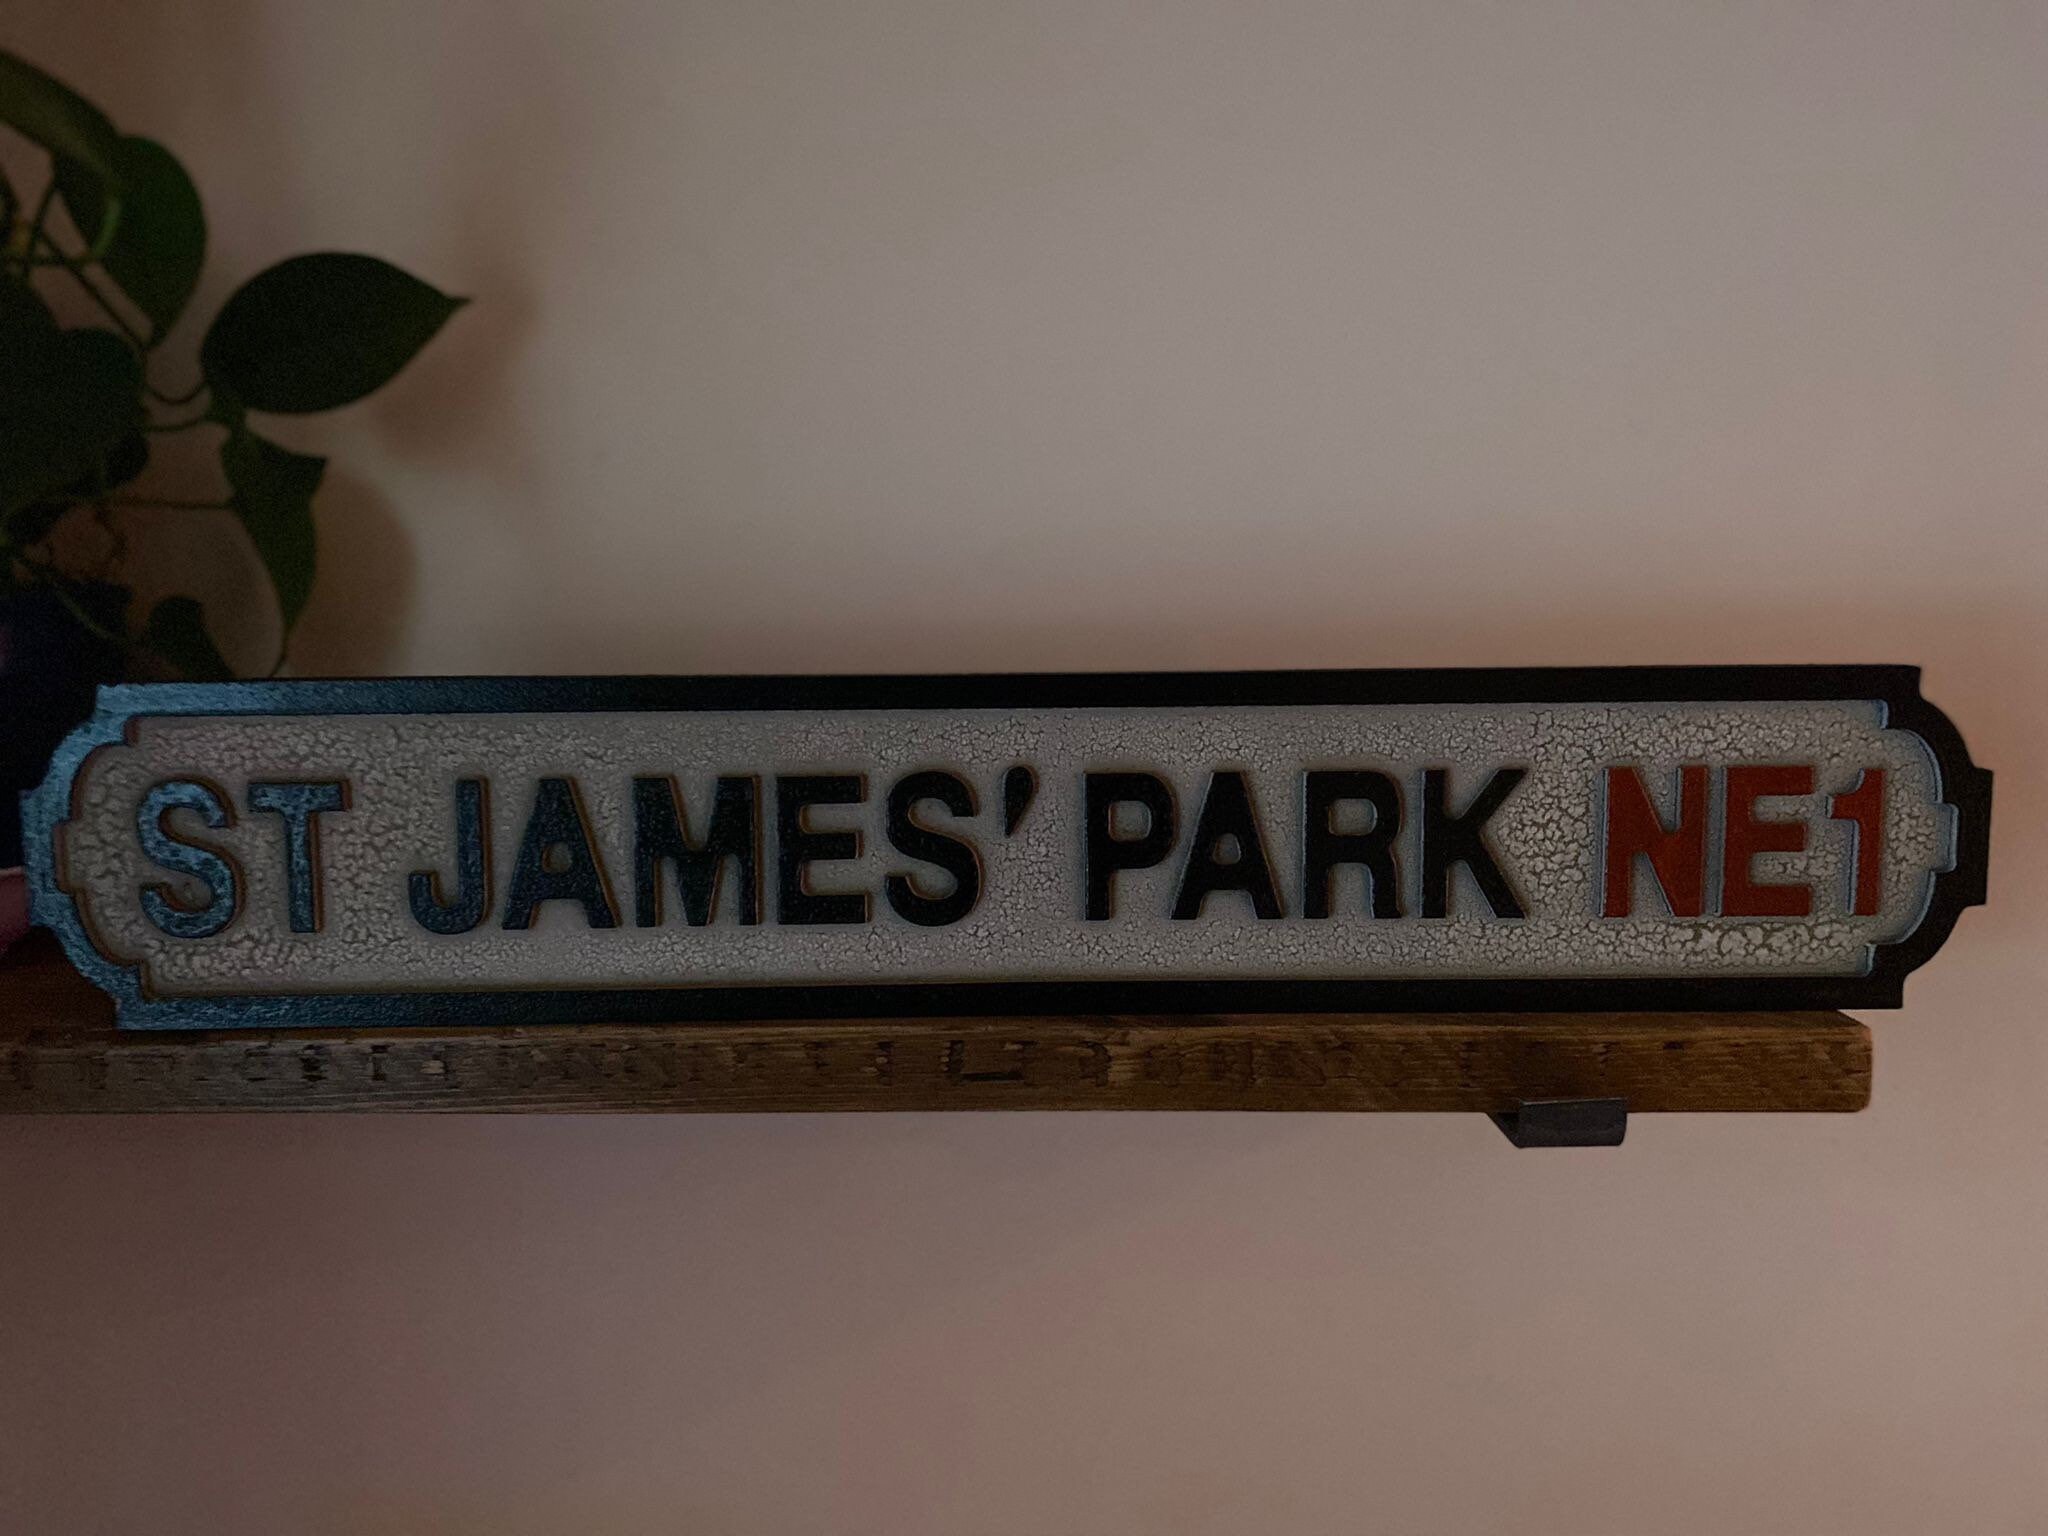 ST JAMES'S PARK METAL SIGN LONDON STREET Novelty Retro Wall Plaque VINTAGE 